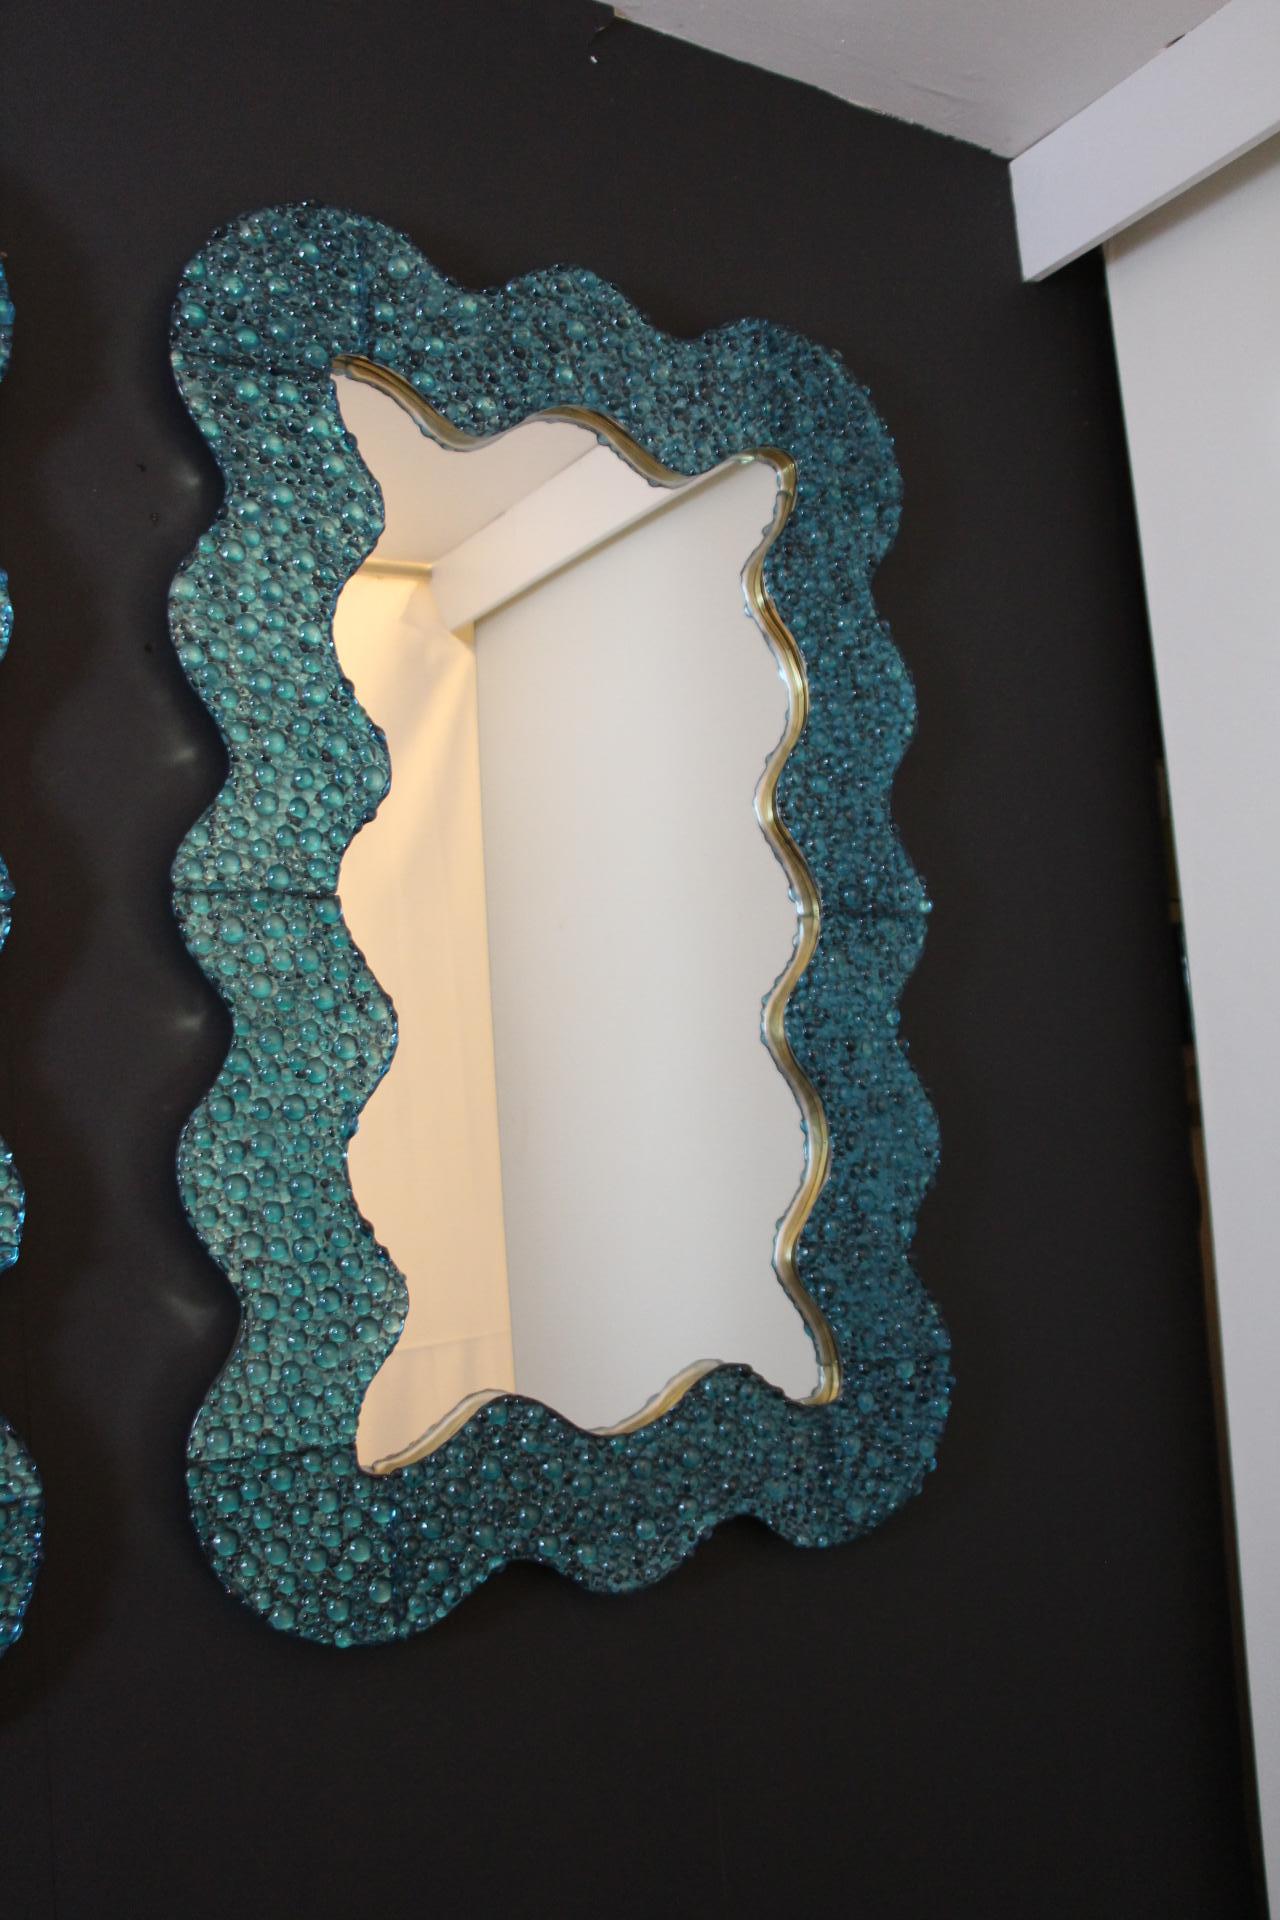 Organique Grands miroirs en verre de Murano texturé bleu turquoise ondulé, en stock en vente